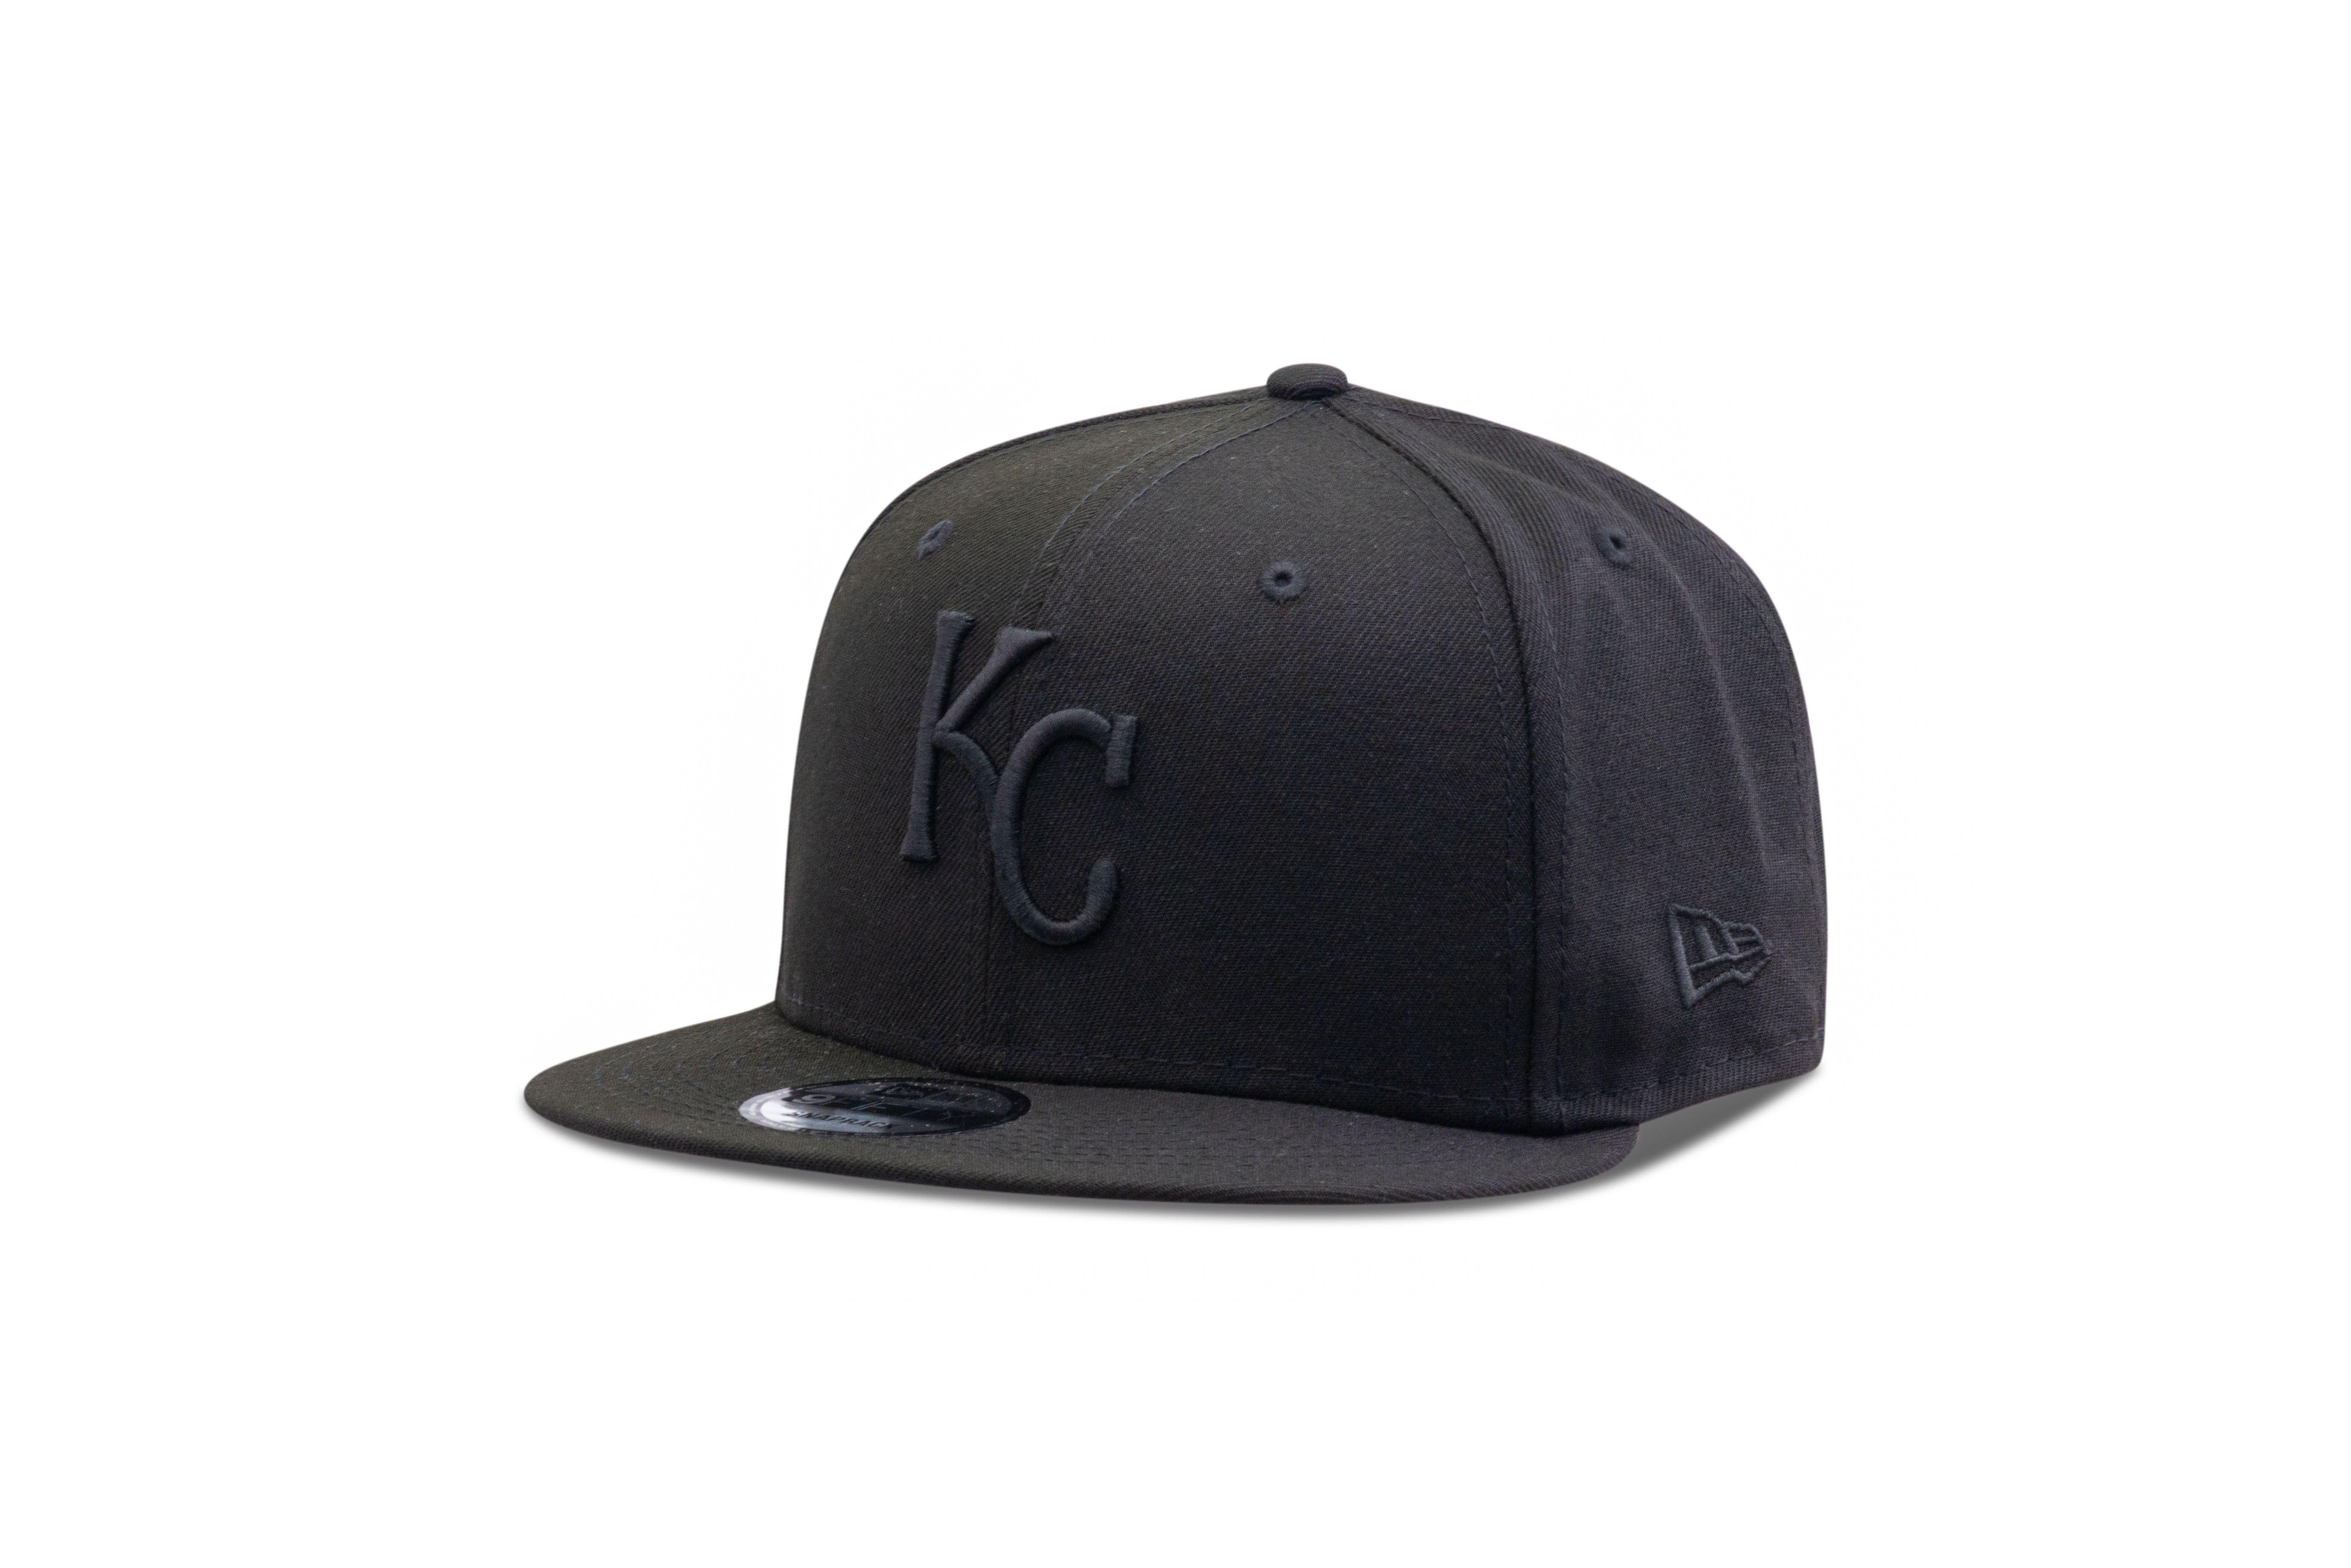 New Era Kansas City Royals MLB Basic Snapback Black on Black 950 Adjustable Cap